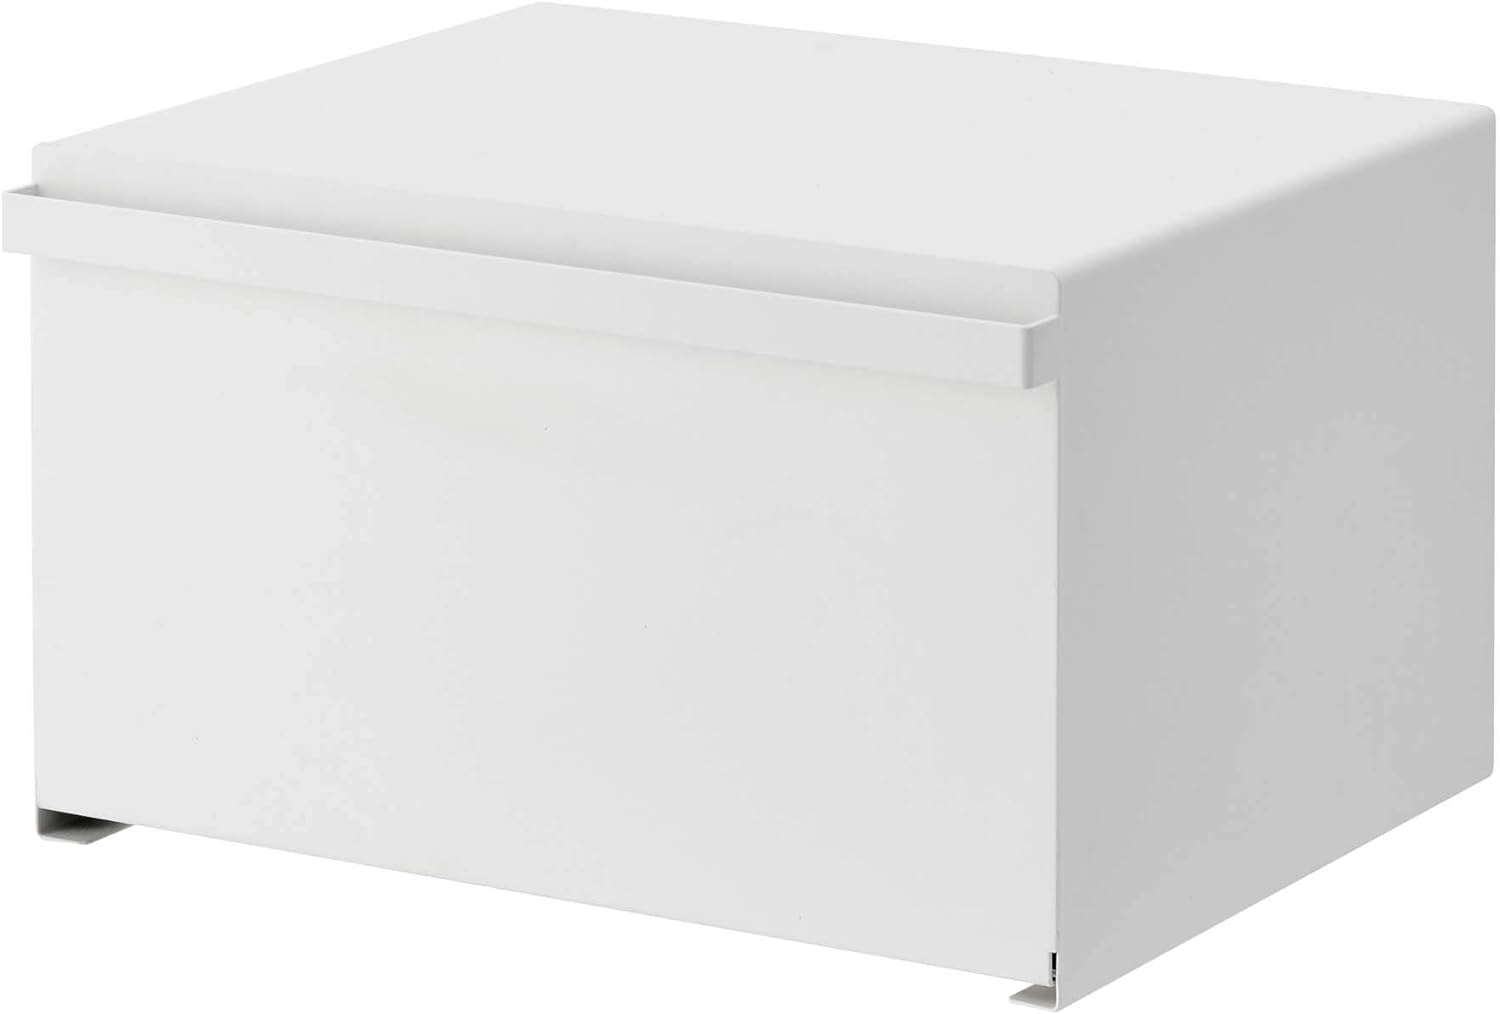 Yamazaki Home Bread Box Keeper Holder Container, Metal Bread Holder Saver, Slim Space Saving Counter Storage Steel One Size White